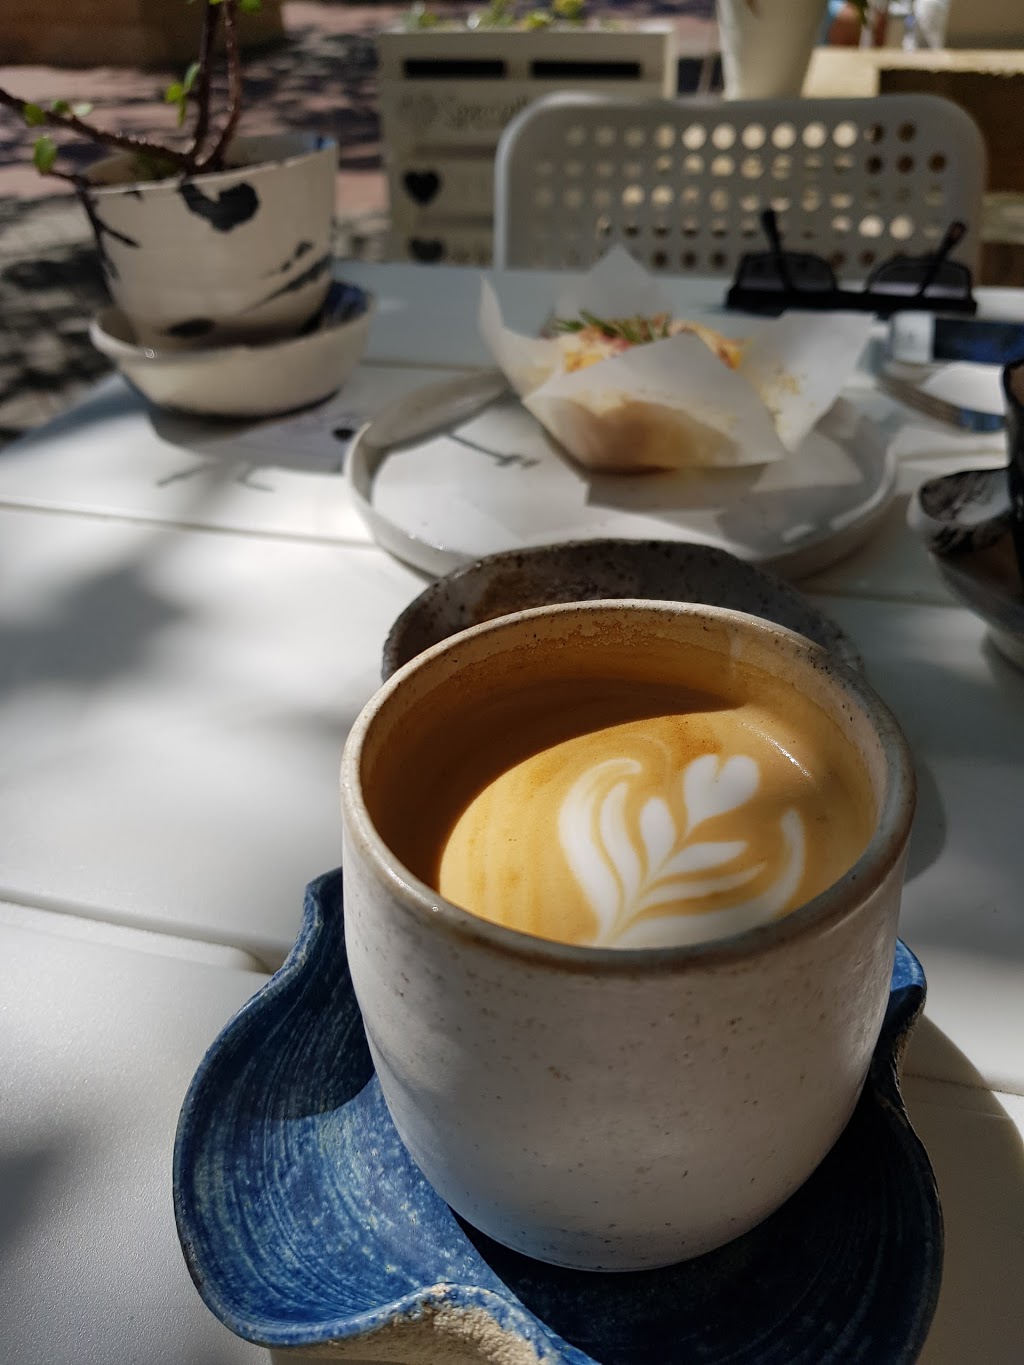 3 Hearts Ceramics and Cafe | cafe | 4 Zephyr Mews, Mandurah WA 6210, Australia | 0423647993 OR +61 423 647 993